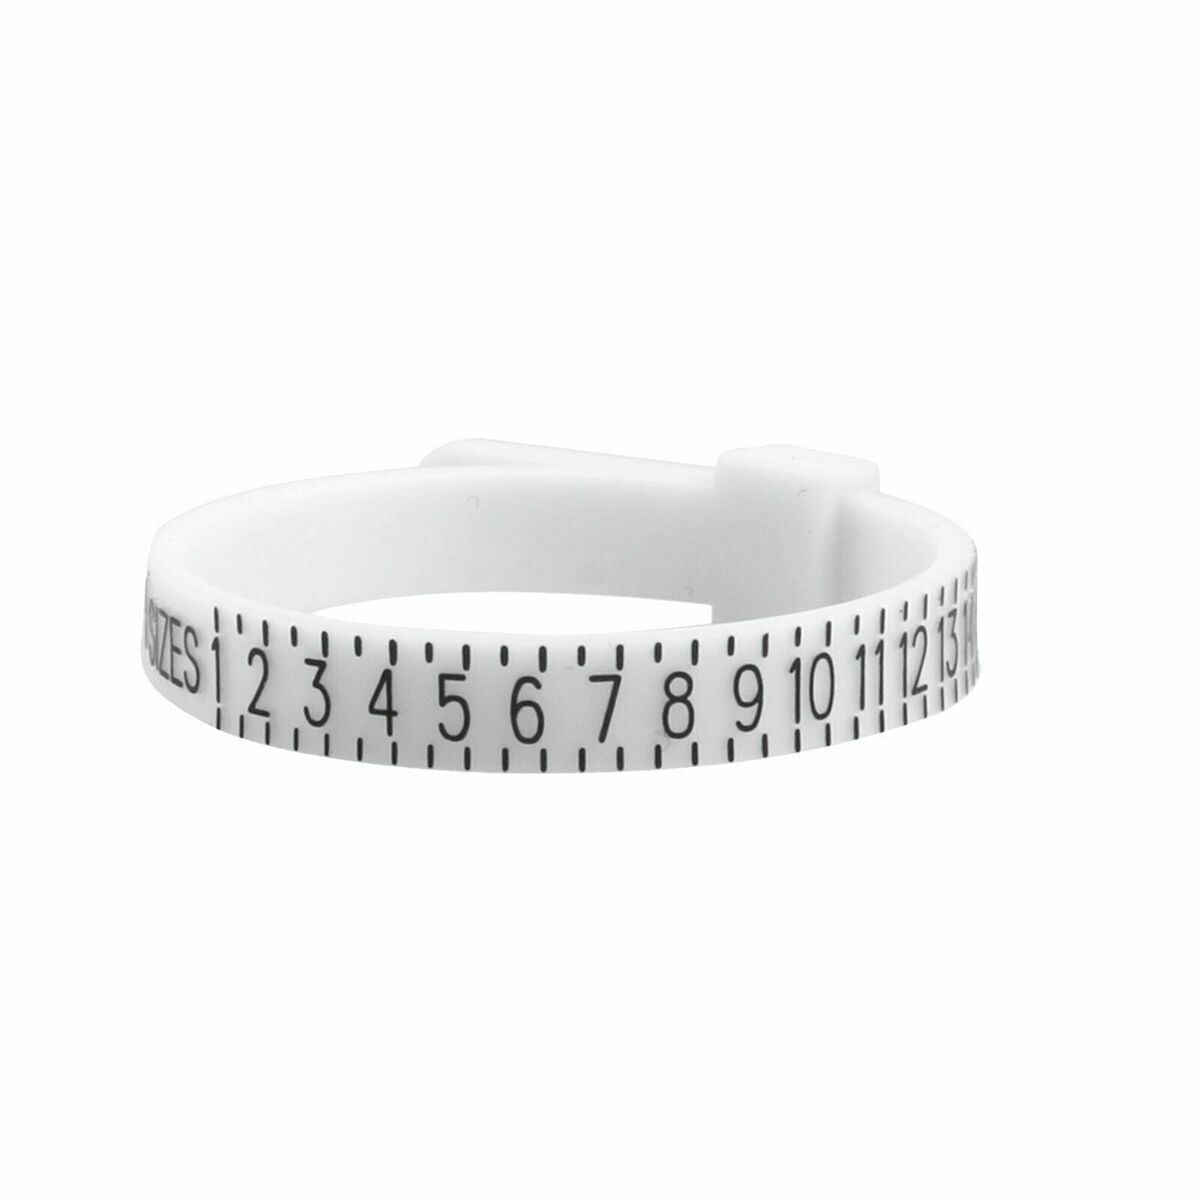 Ring Sizer Measuring Tool Ring Size Measurement Tools Ring Sizing Kit  Finger Measurer Jewelry Sizes Gauge US 1-17 Reusable 4 Pieces